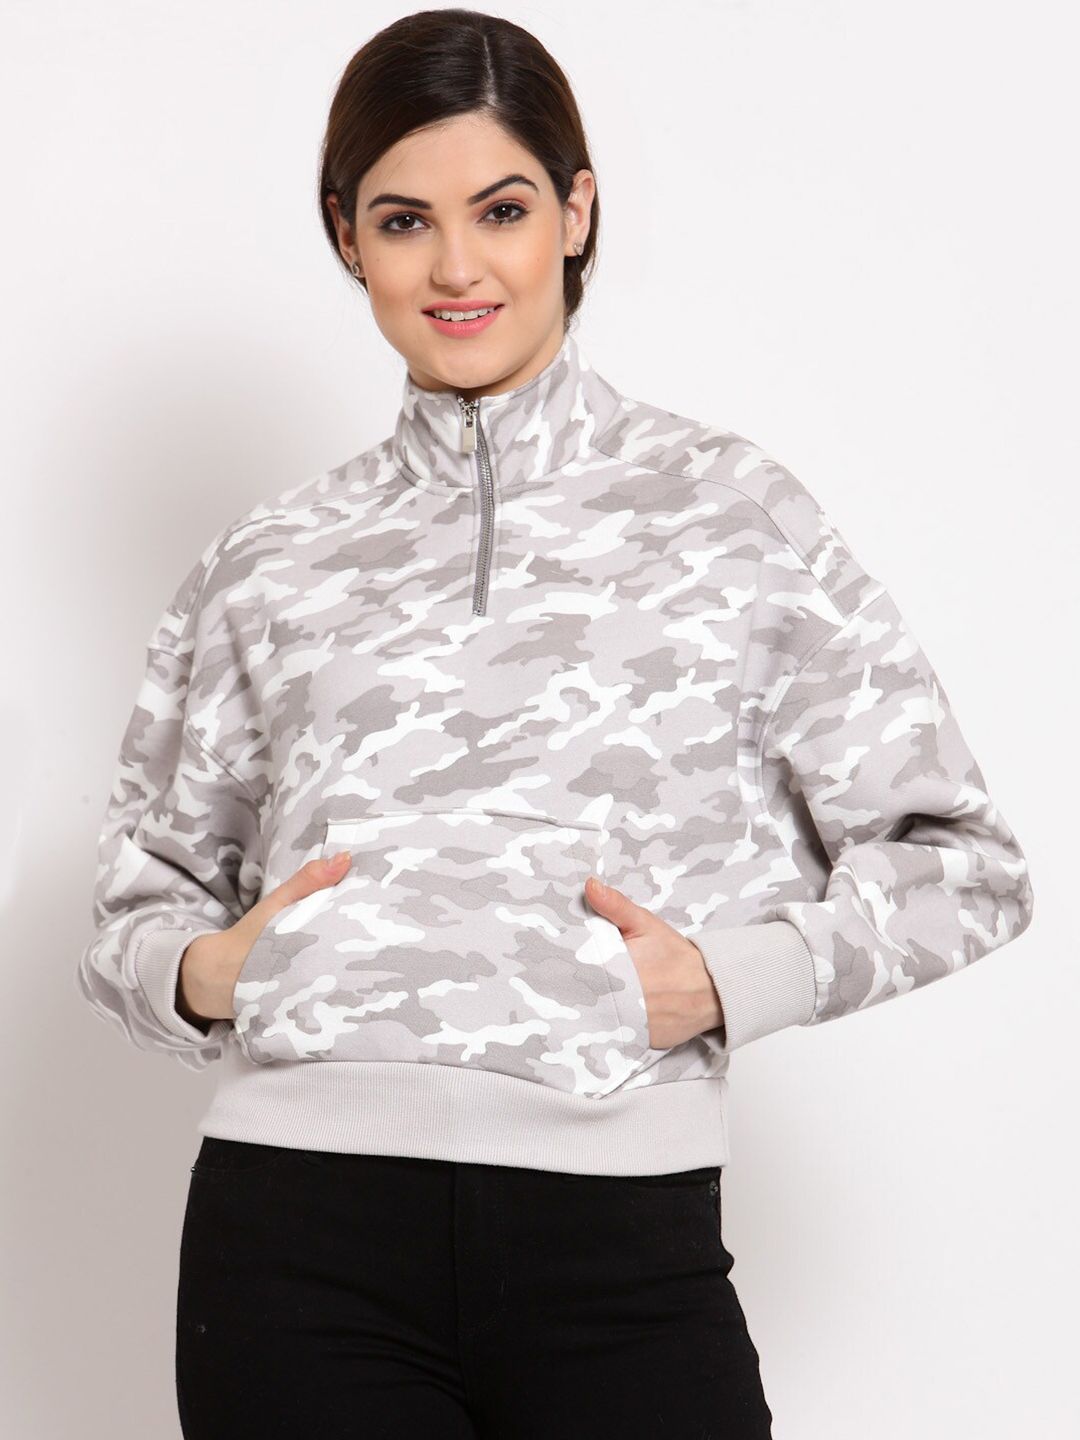 Juelle Women Grey & White Camouflage Printed Sweatshirt Price in India